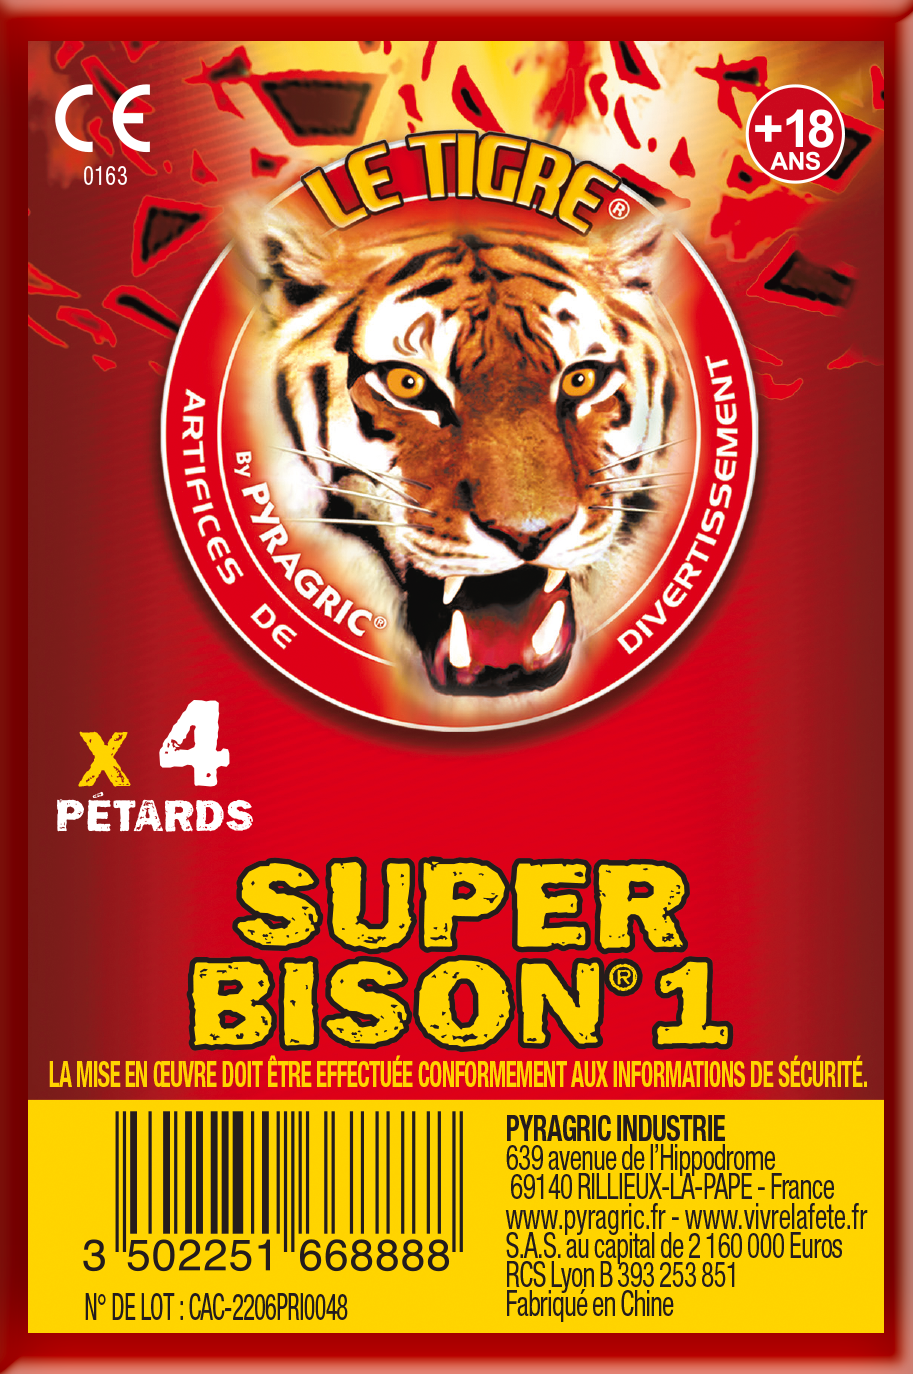 PÉTARDS LE TIGRE® SUPER BISON® 1 - P166888